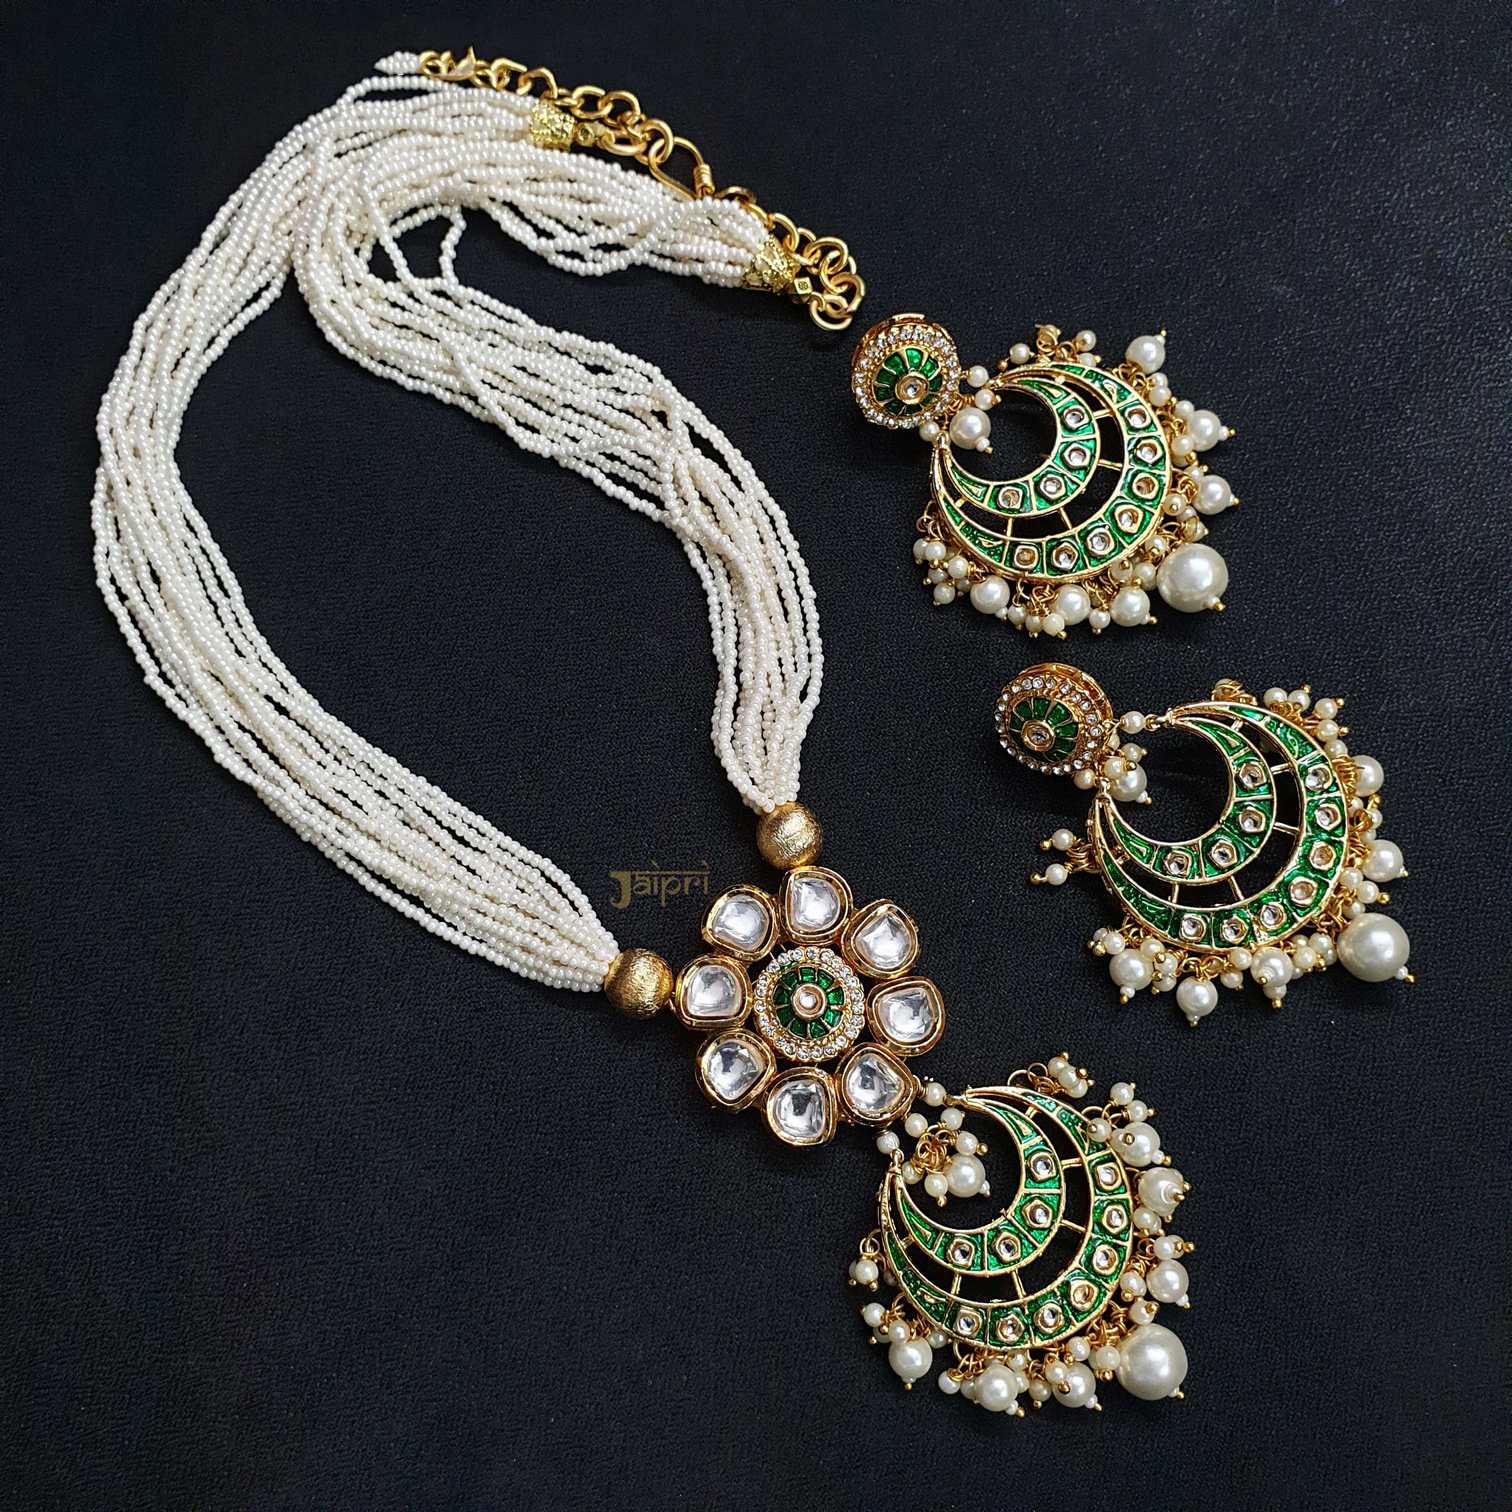 Green Floral Meenakari Pendant With Chand-Bali Earrings